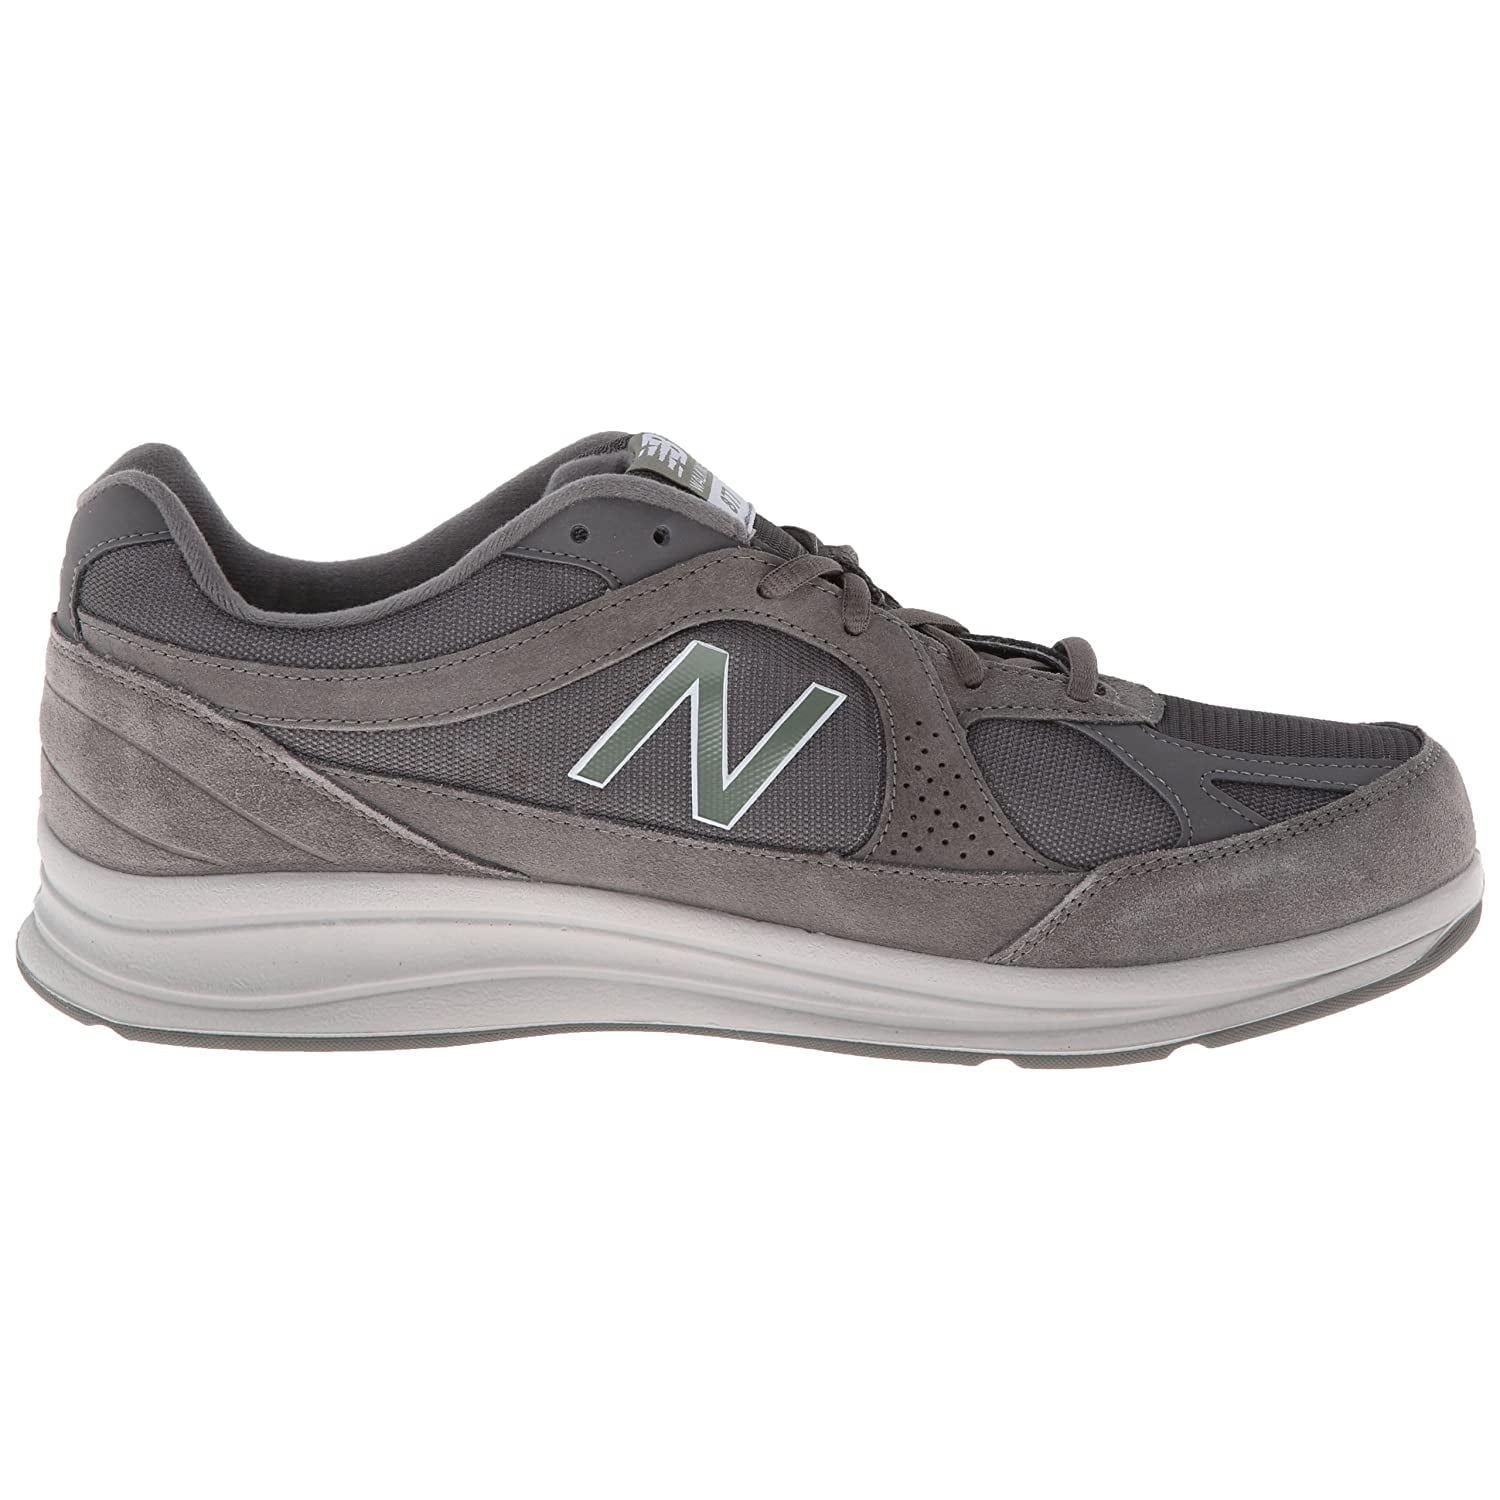 nb 877 walking shoe